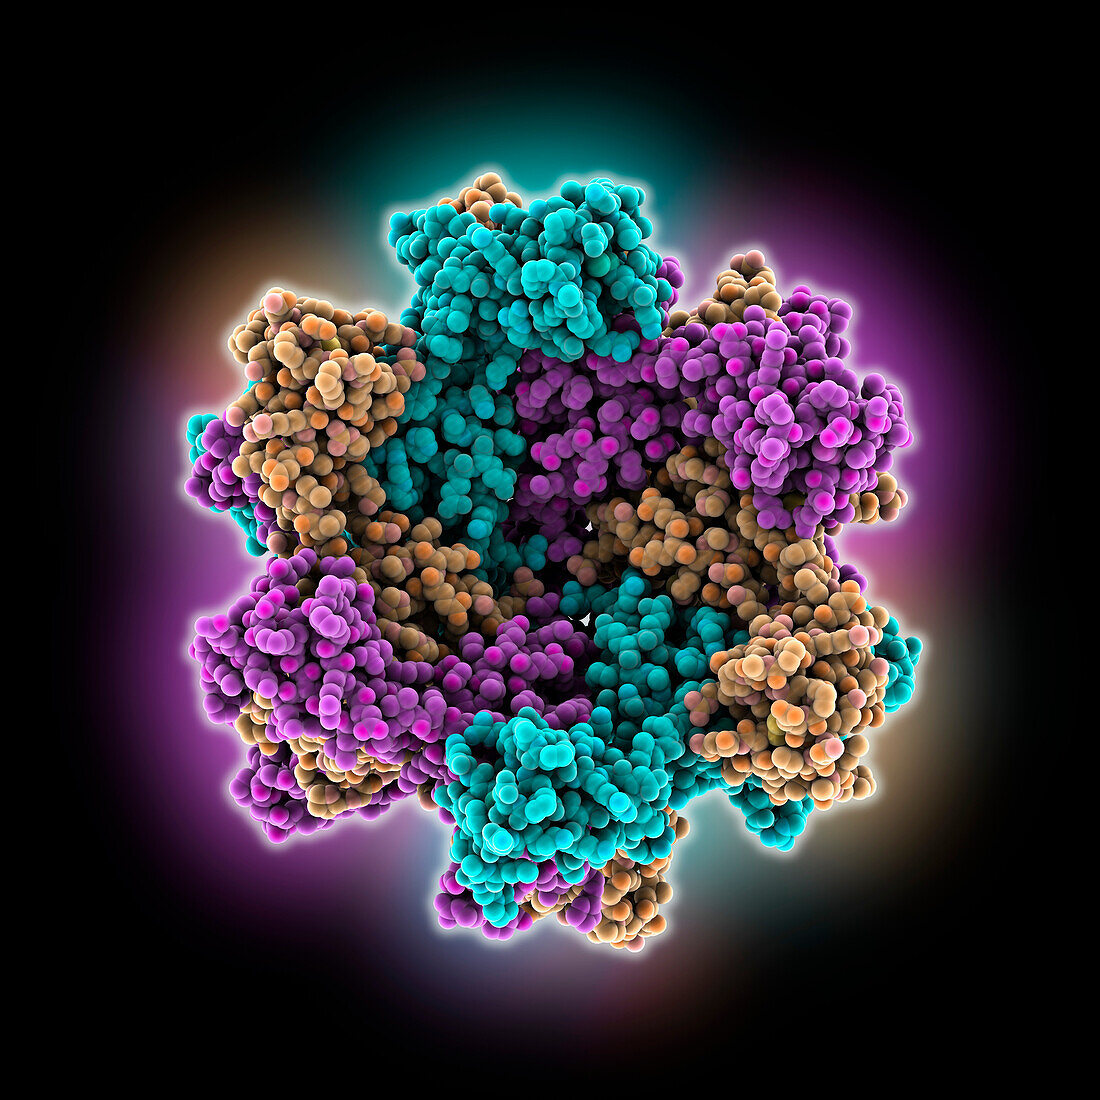 Hexameric HIV-1 group O CA, molecular model